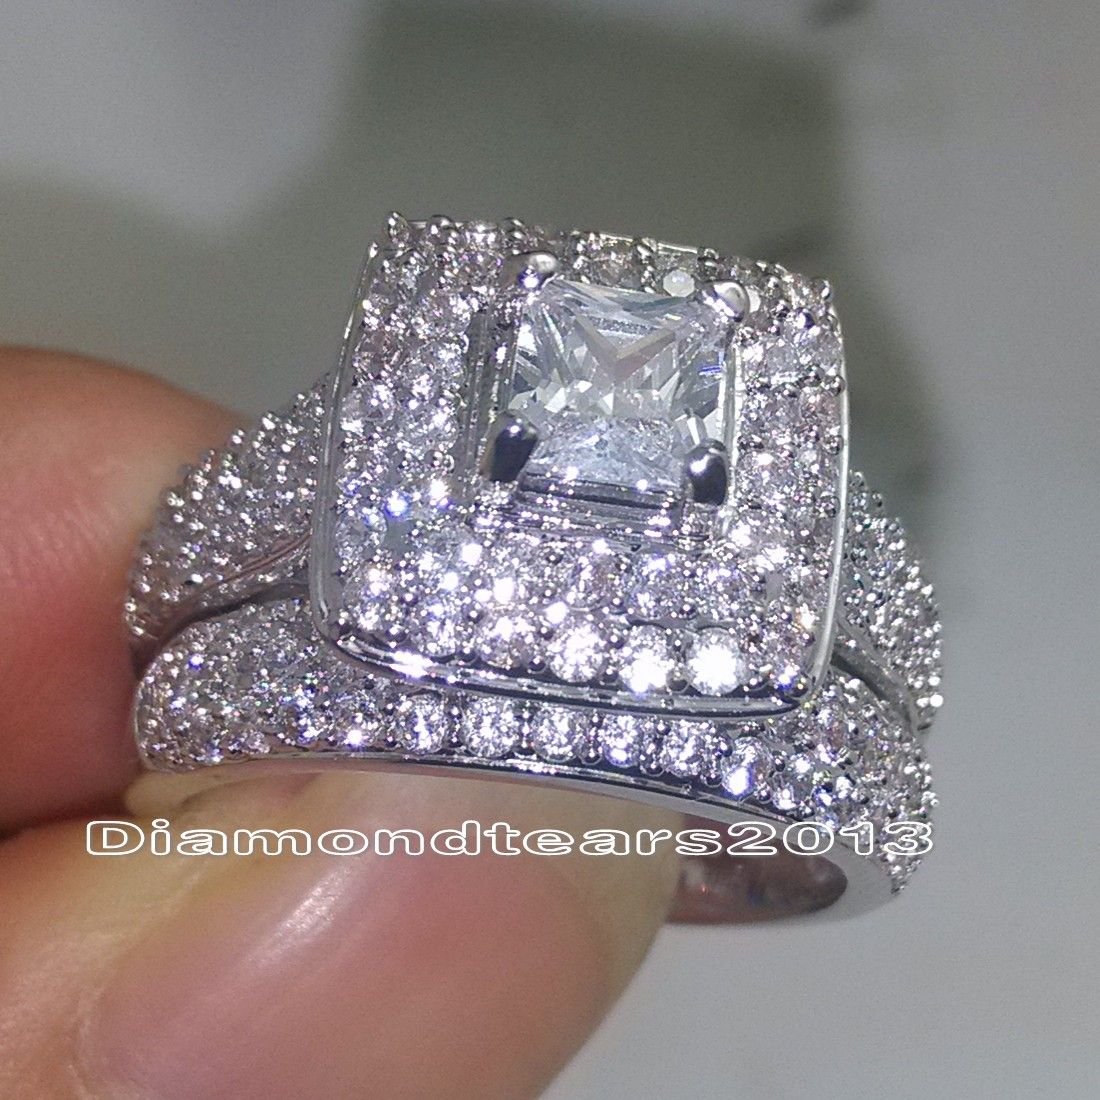 Fashion Jewelry 134pcs stones Size 6-10 luxury 14kt white gold Filled Full white topaz CZ Diamond Wedding Women Ring Set for lover gift